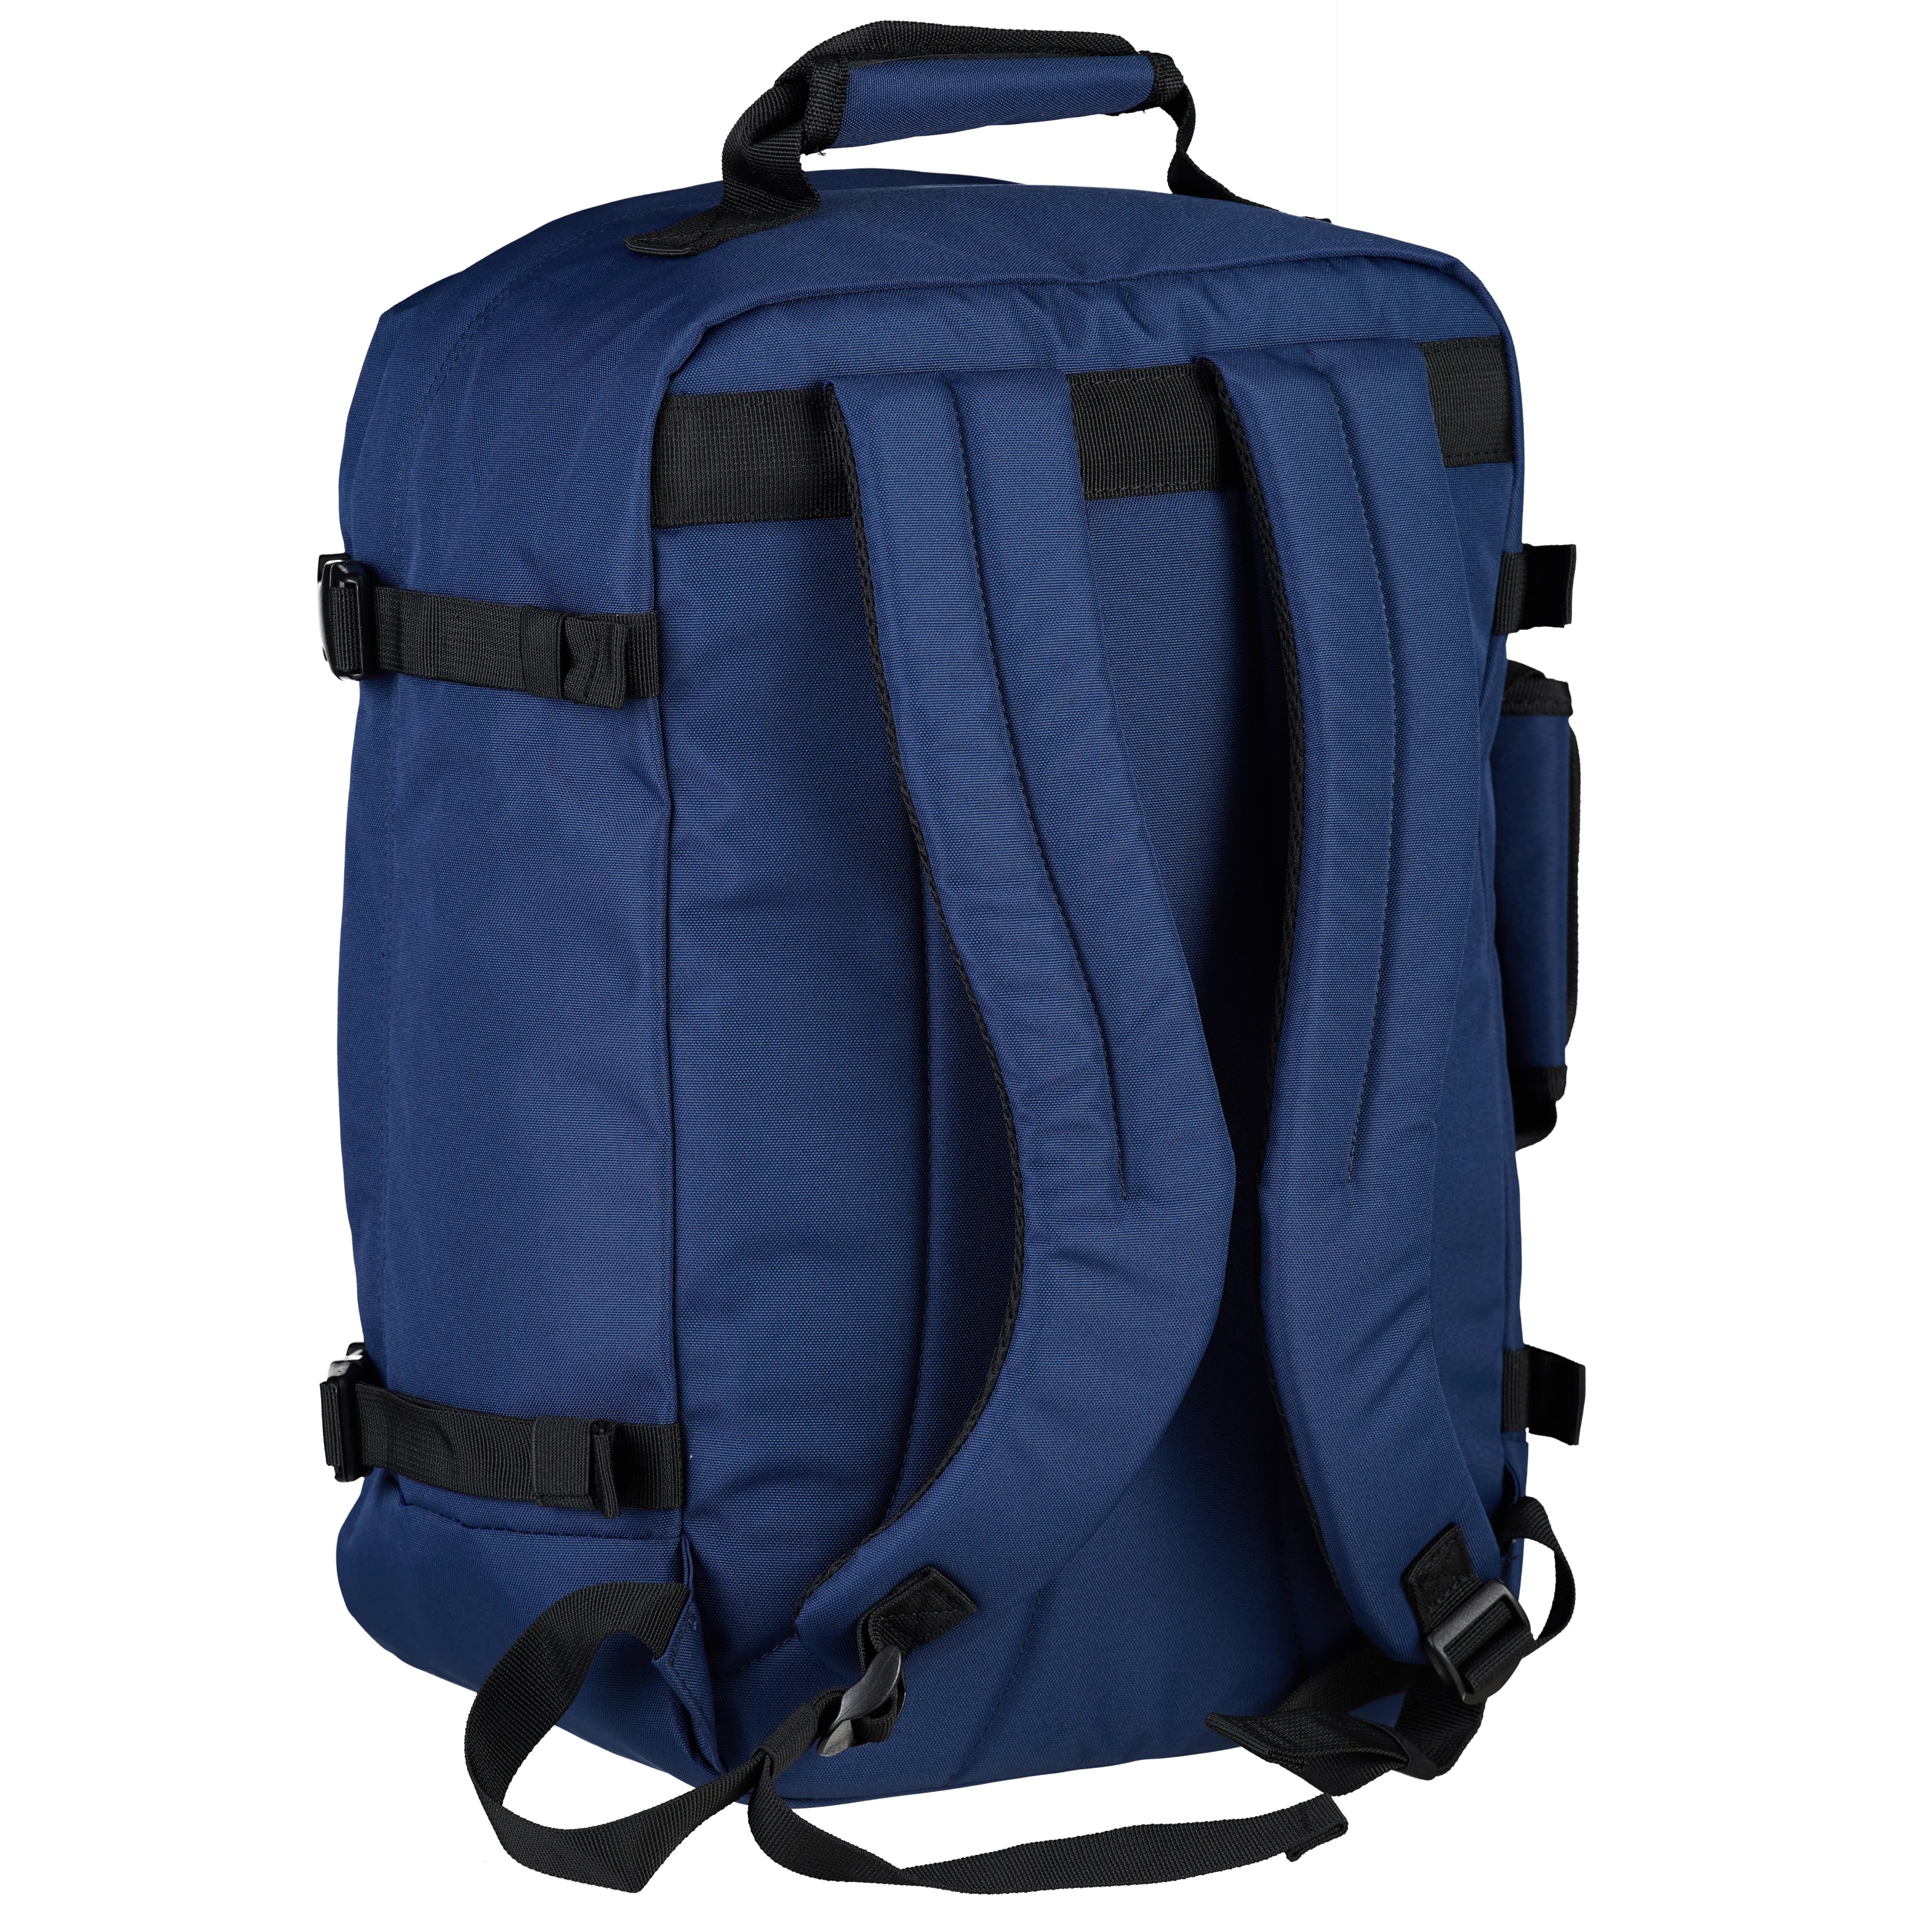 CabinZero Cabin Backpacks Classic 36L Backpack 45 cm - original gray